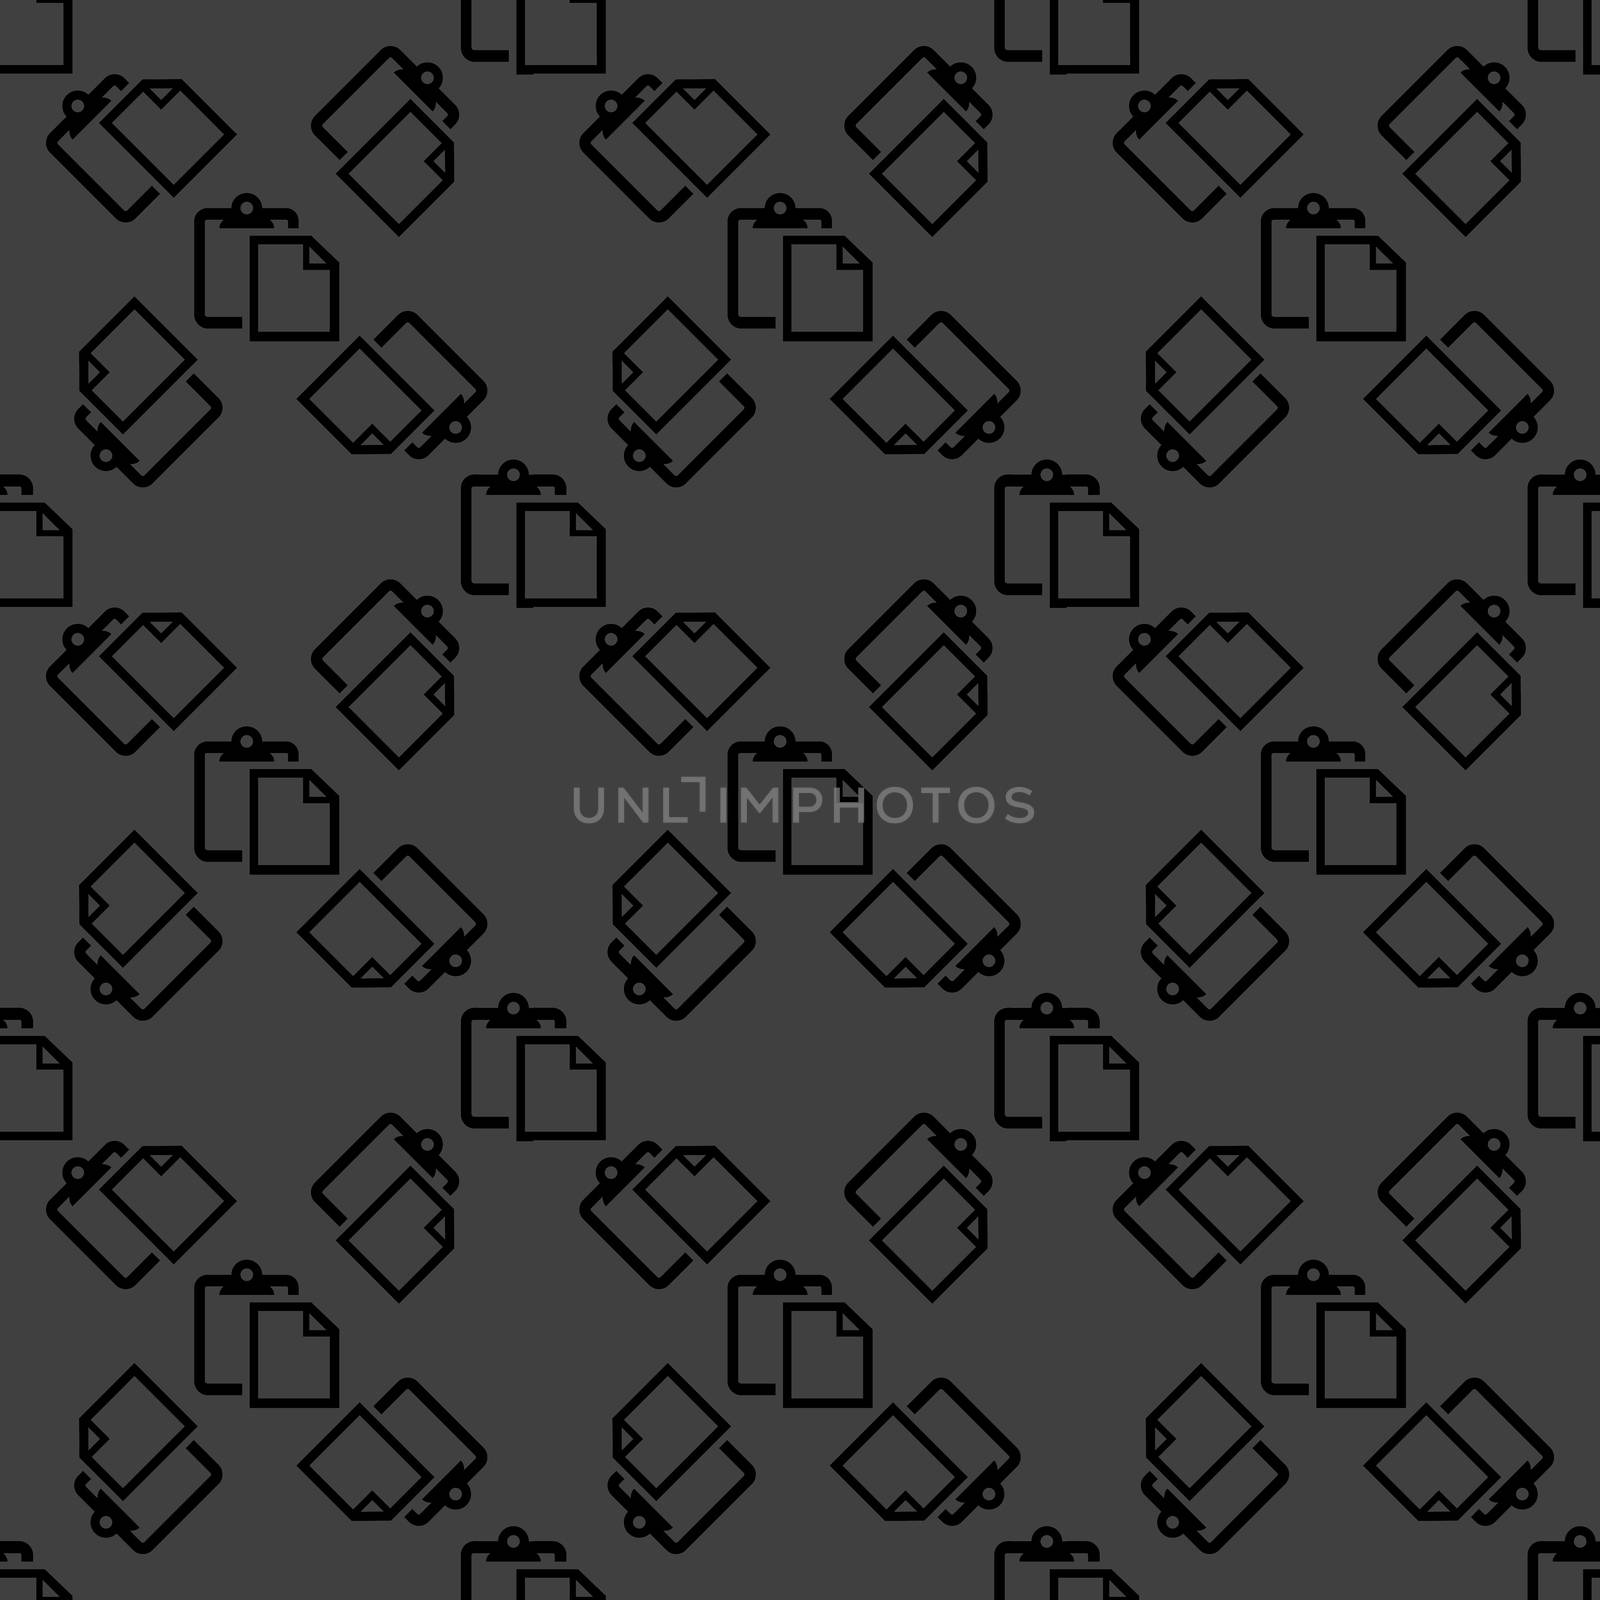 blank paper web icon. flat design. Seamless pattern. by serhii_lohvyniuk